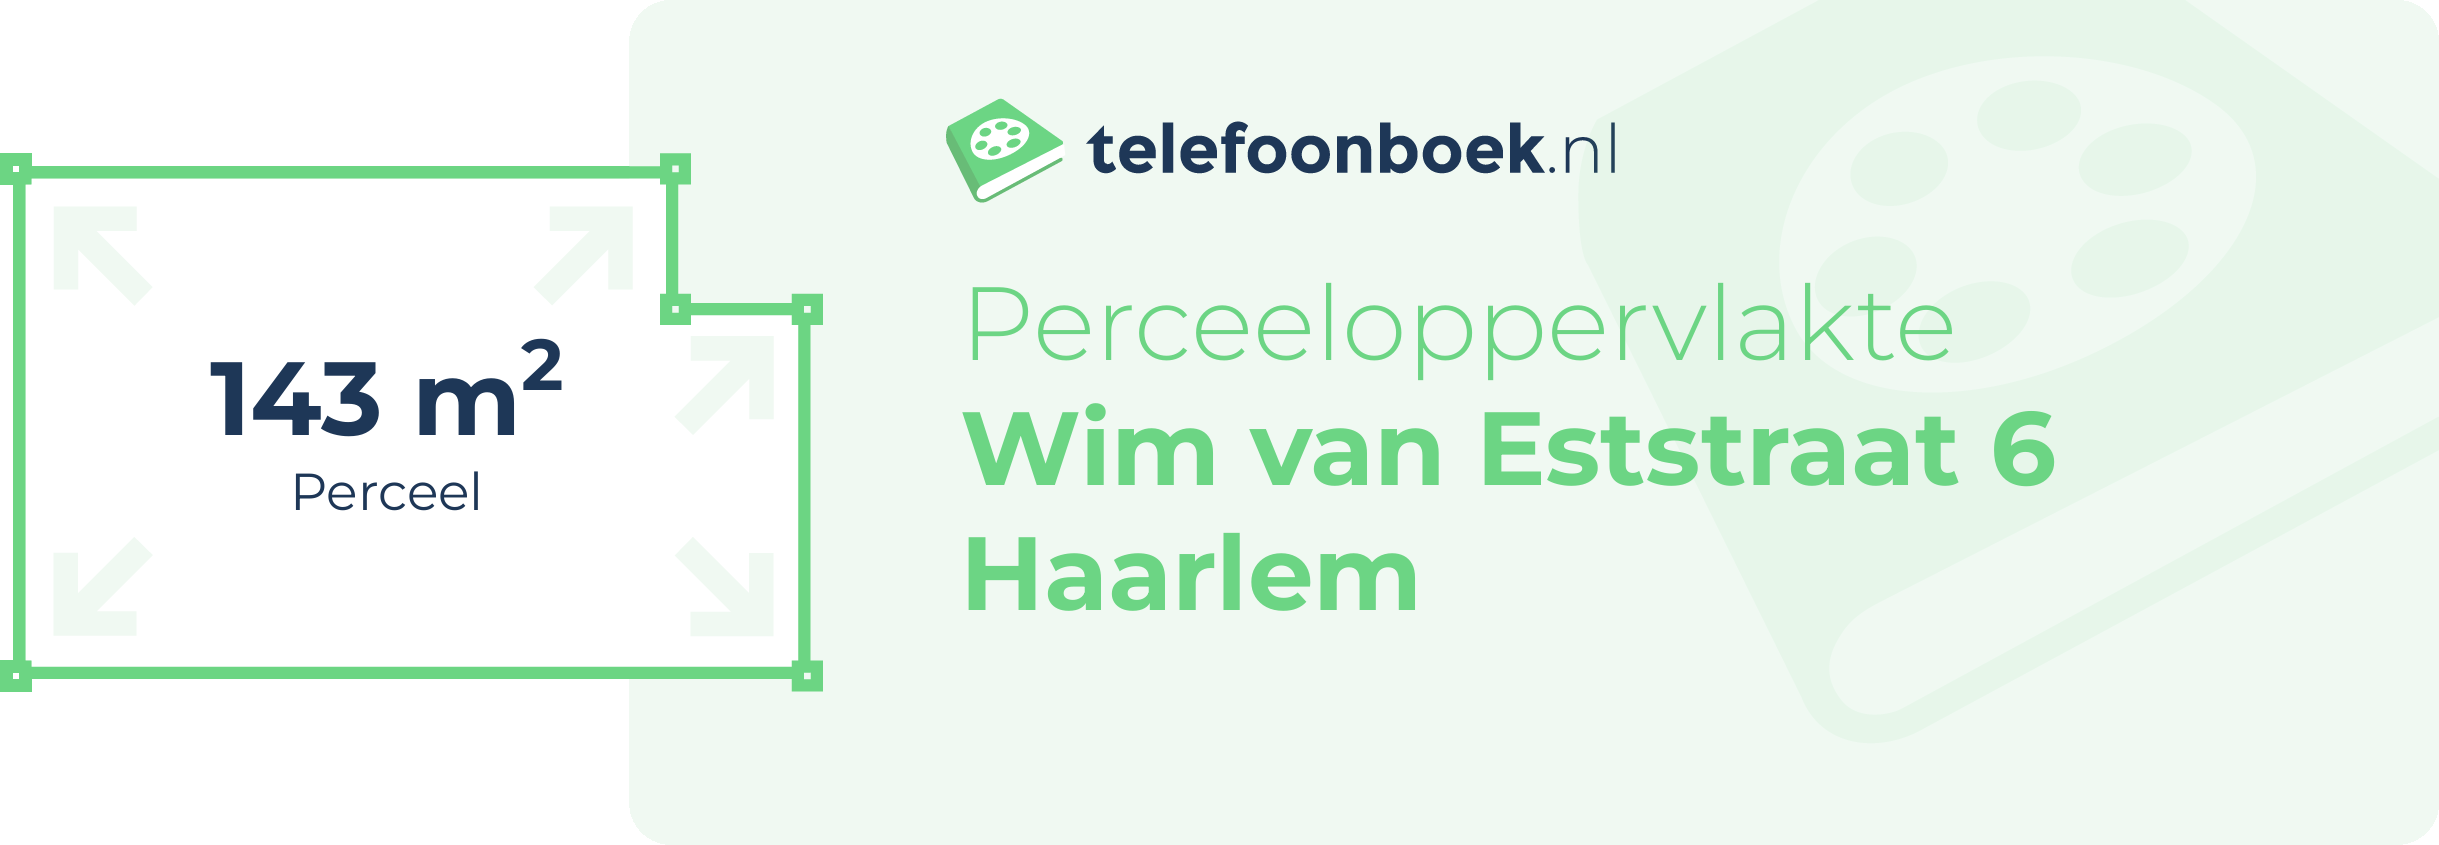 Perceeloppervlakte Wim Van Eststraat 6 Haarlem